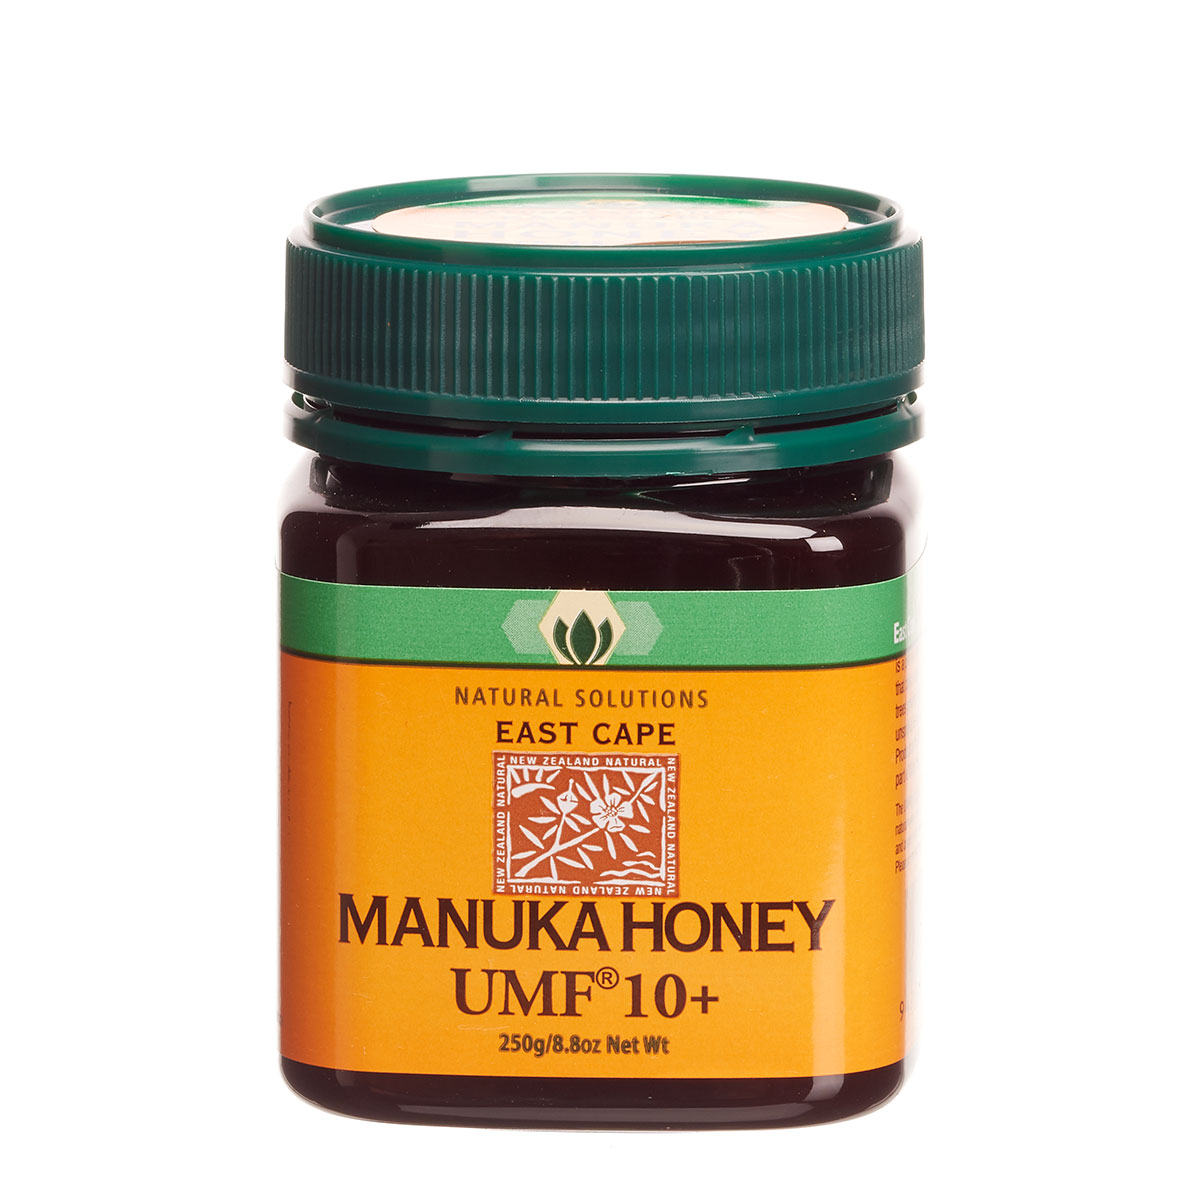 Australians attempt to claim Maori name for their honey